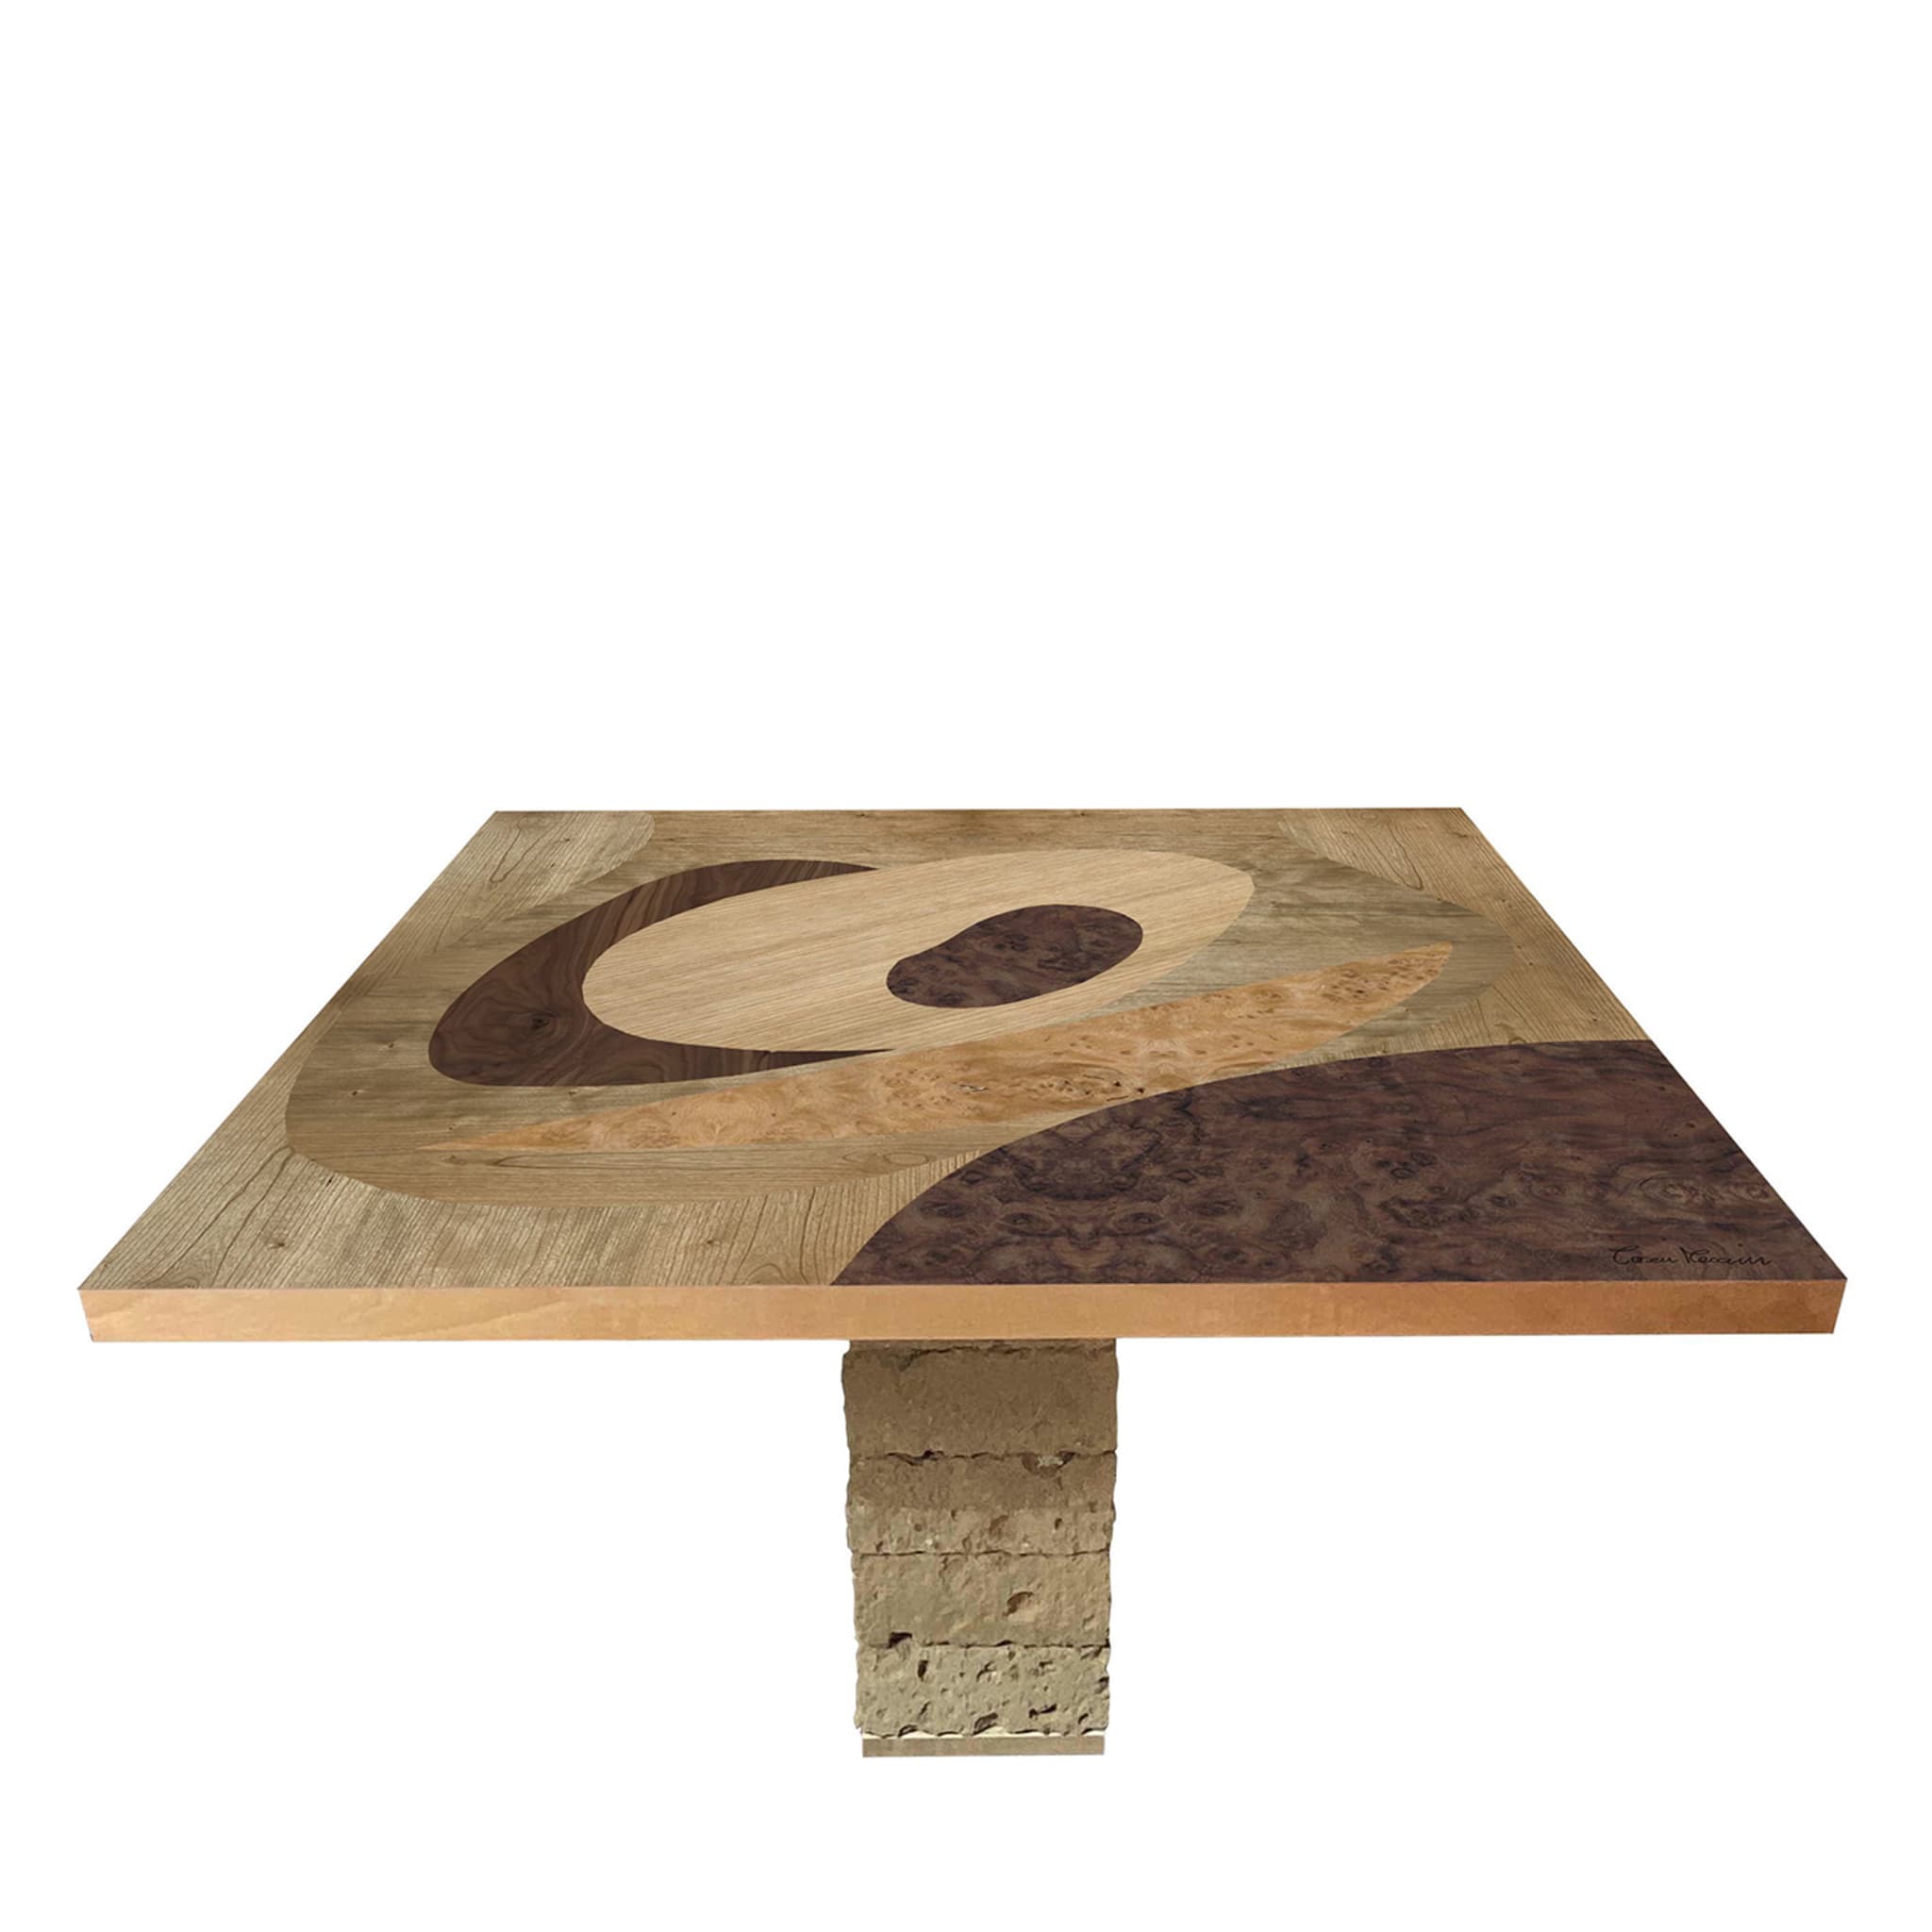 Tarsia Tables Tt3 Square Polychrome Table by Mascia Meccani - Main view